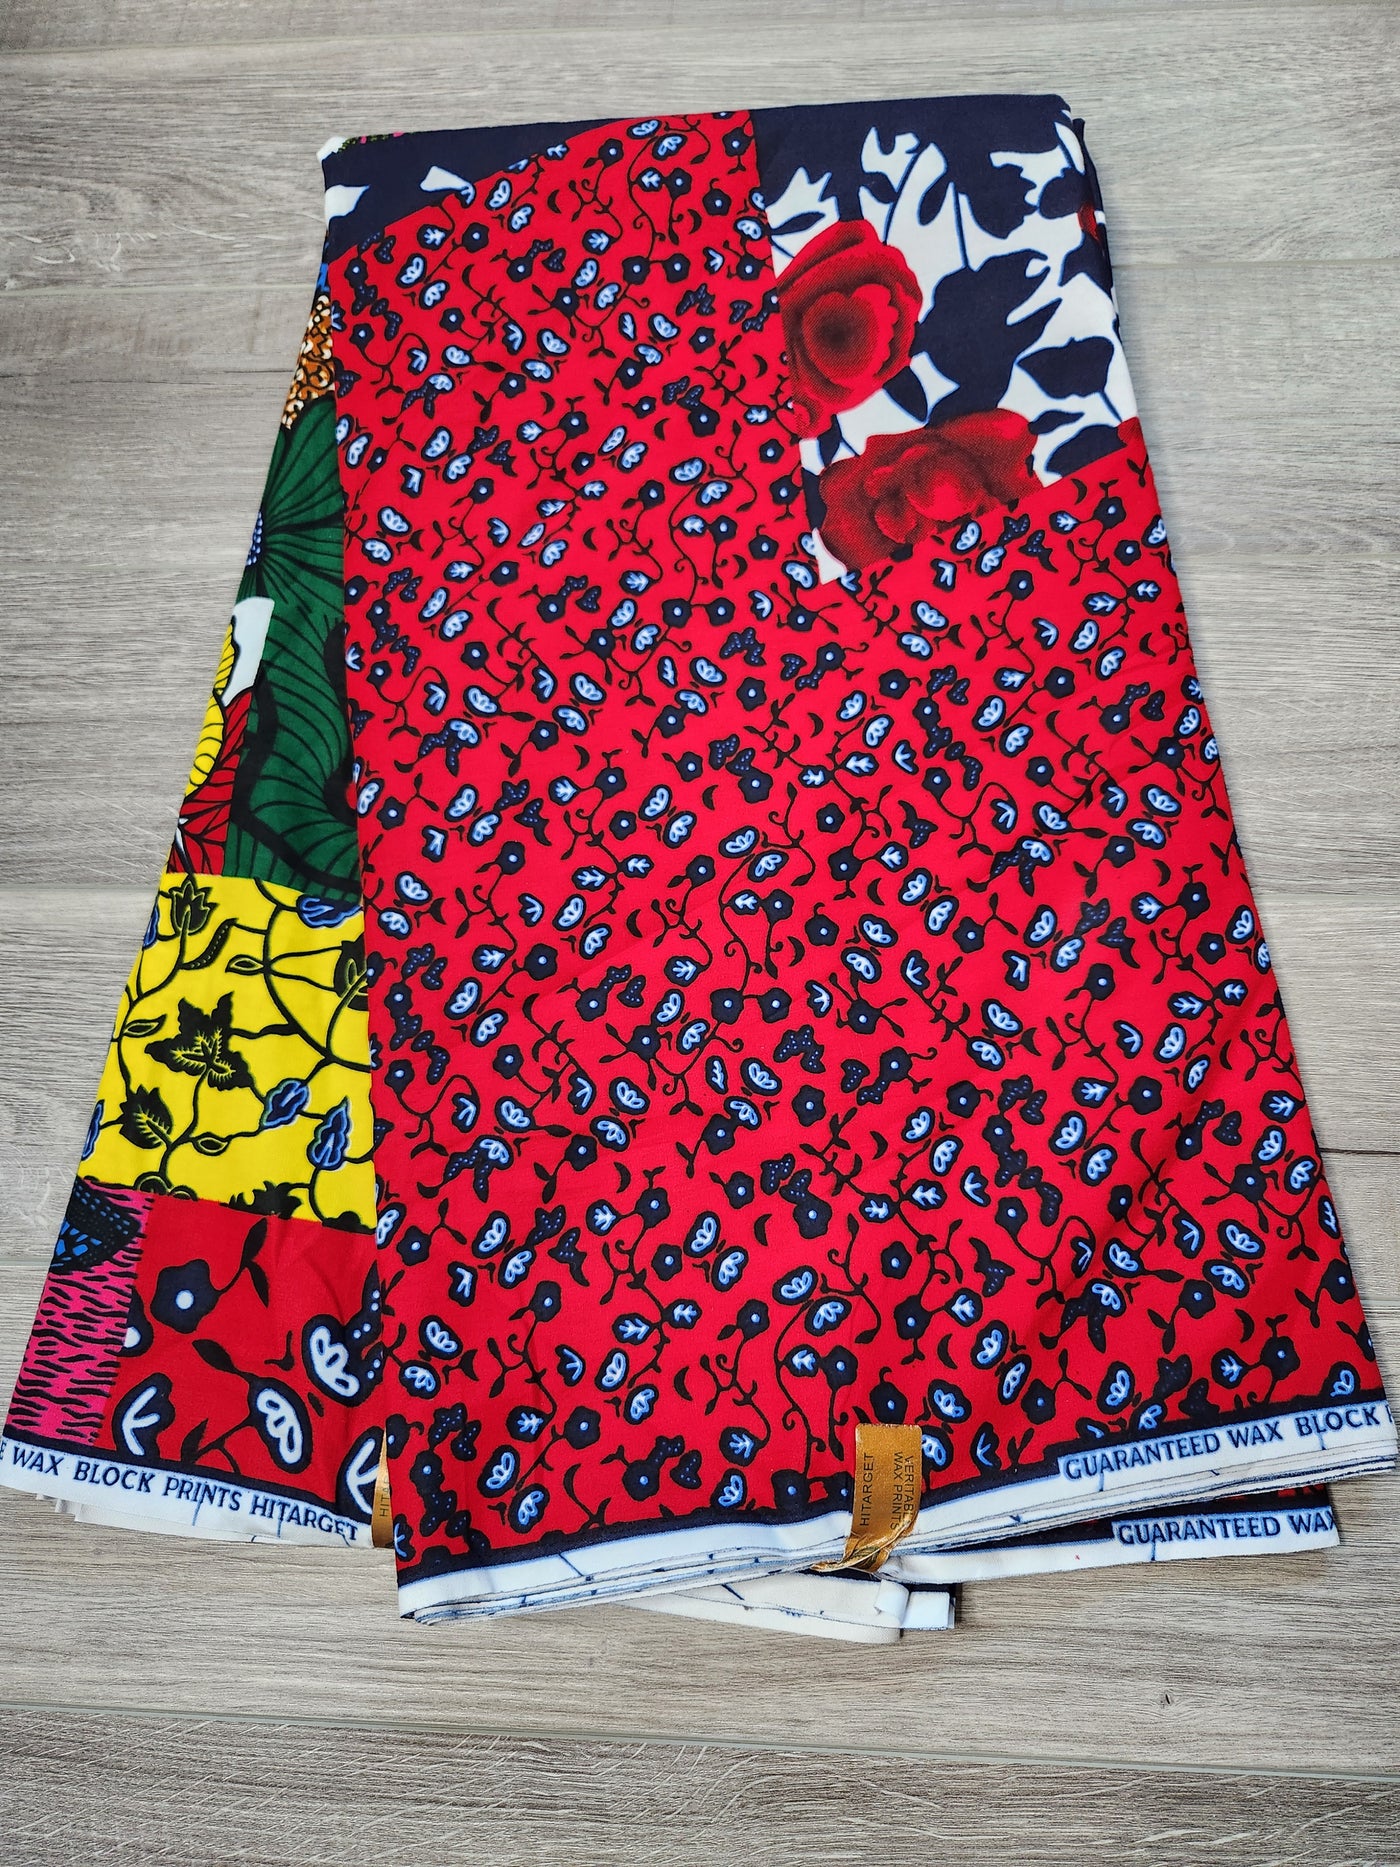 Red Patchwork African Print Fabric, Ankara Fabric